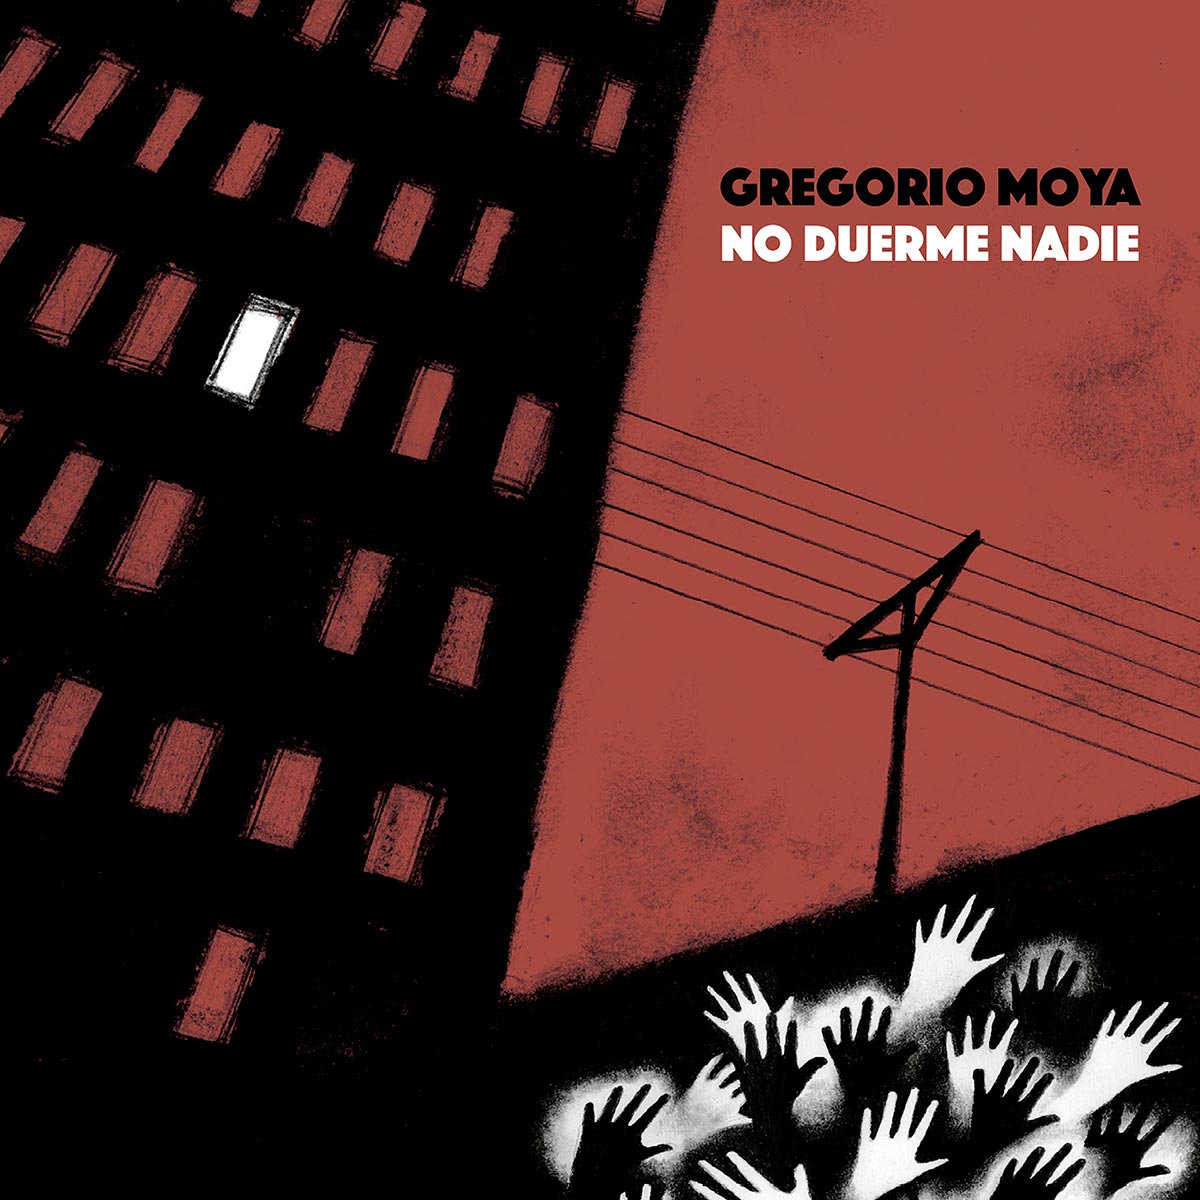 Gregorio Moya “No duerme nadie” CD